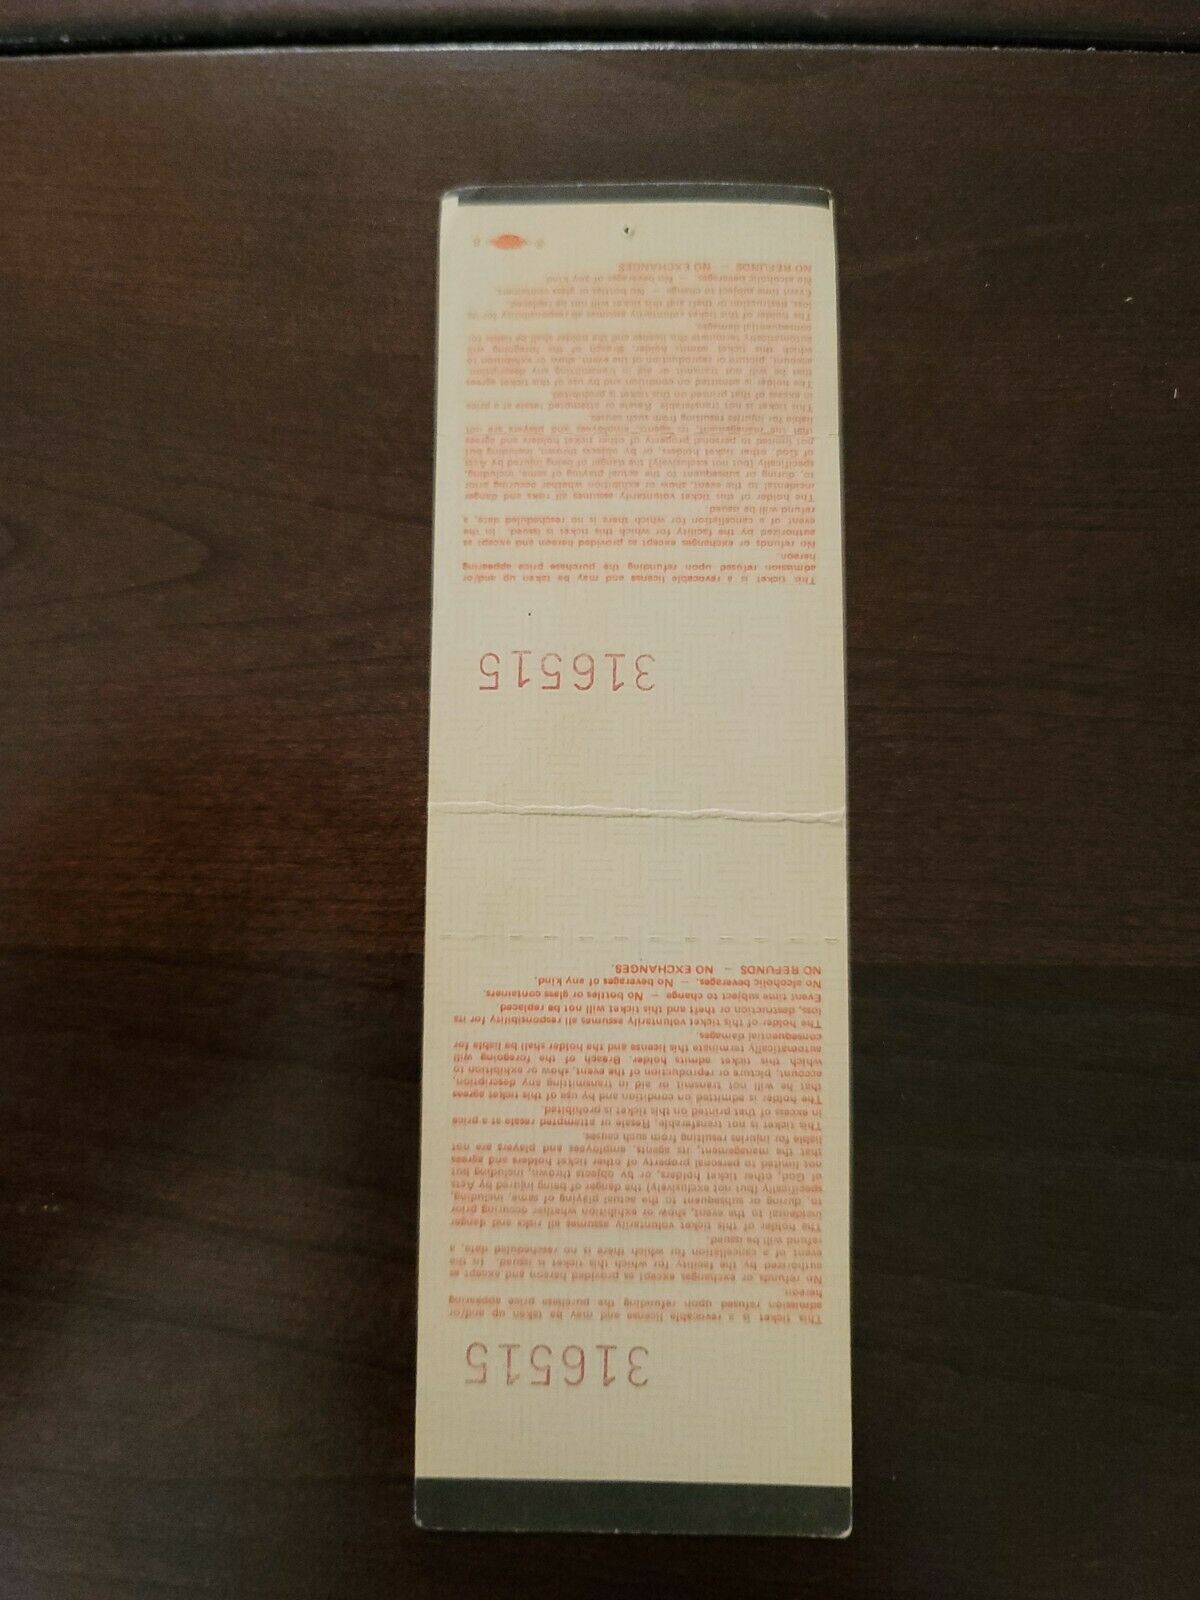 The Pogues 1989, Toronto Kingswood Theatre Original Concert Movie Ticket Stub